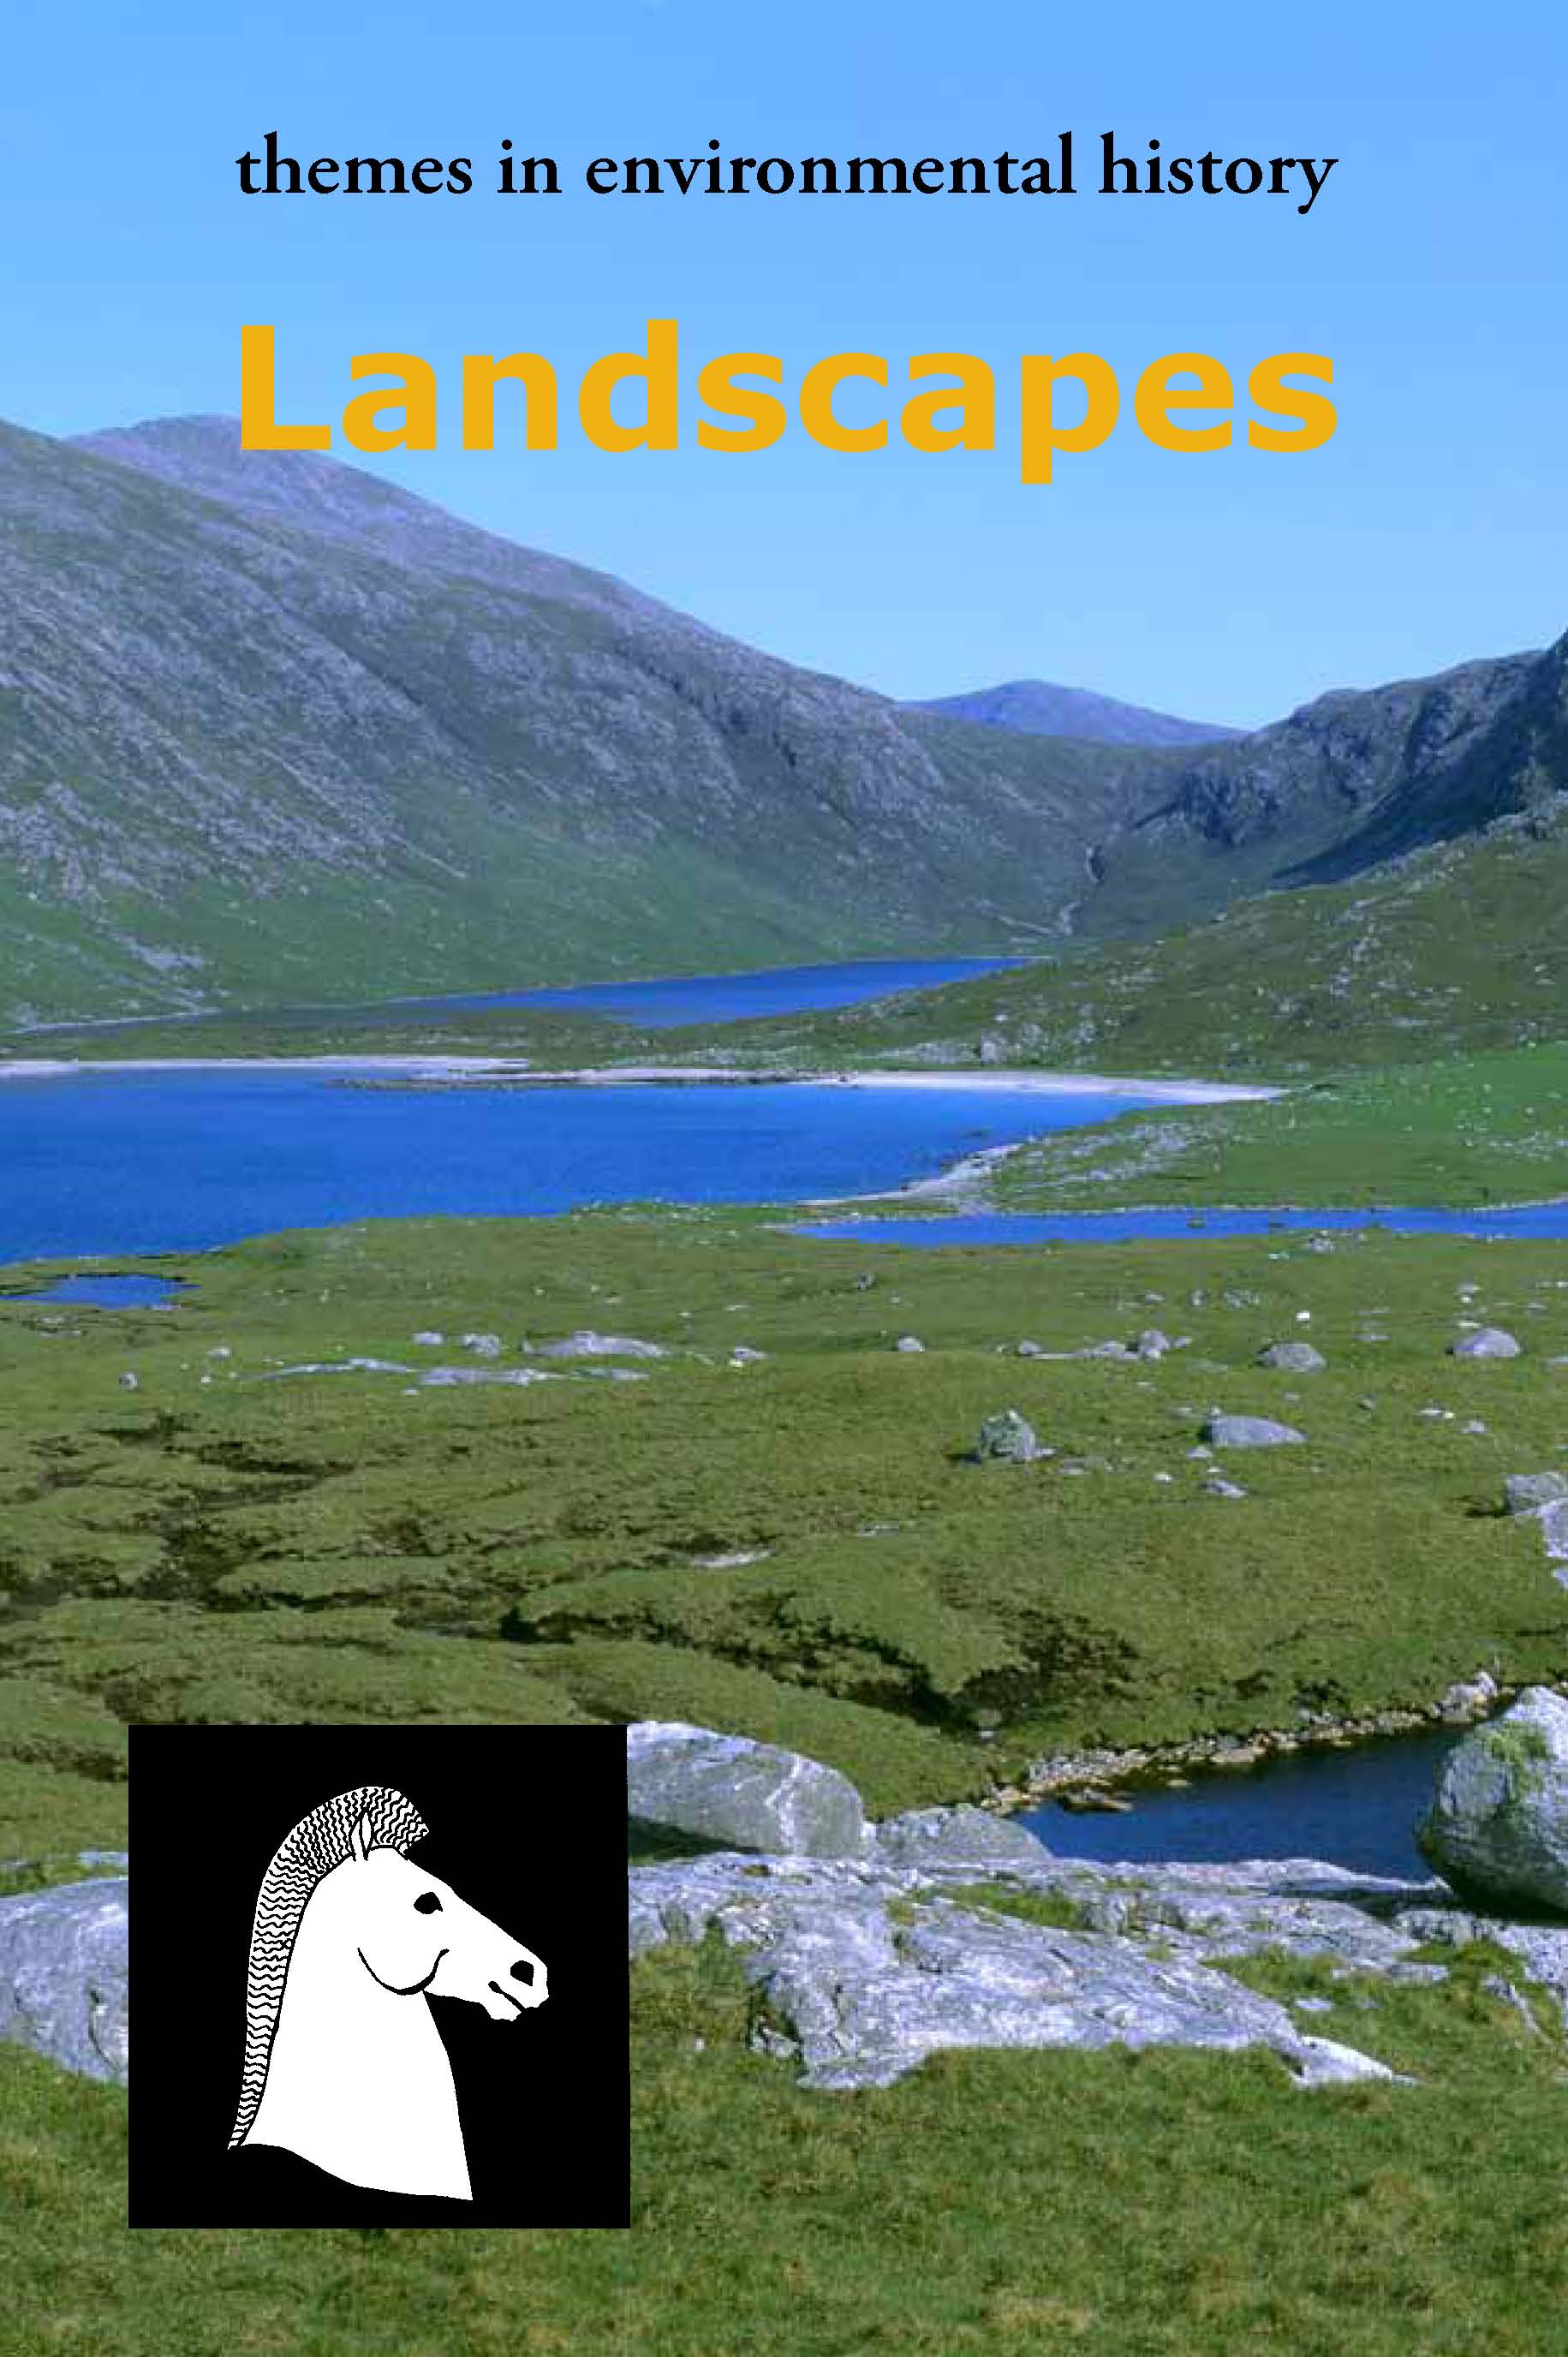 Landscapes (The White Horse Press, 2010)